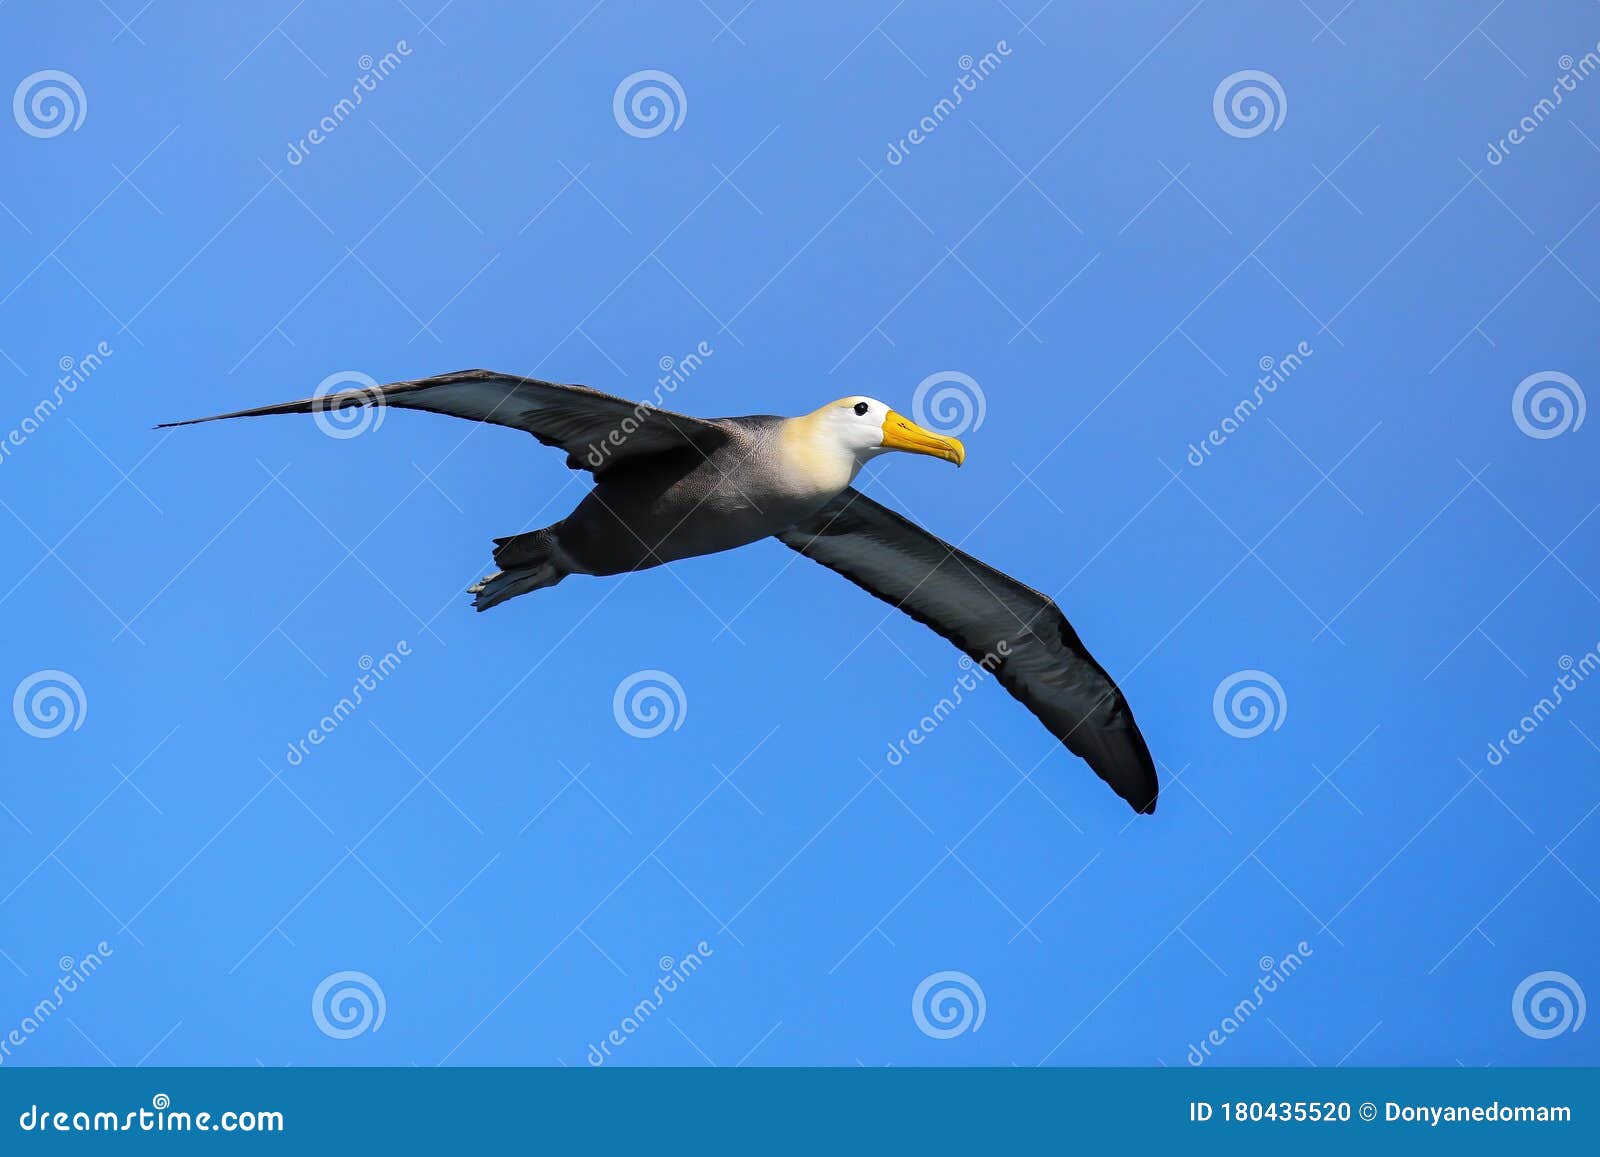 waved albatross in flight on espanola island, galapagos national park, ecuador